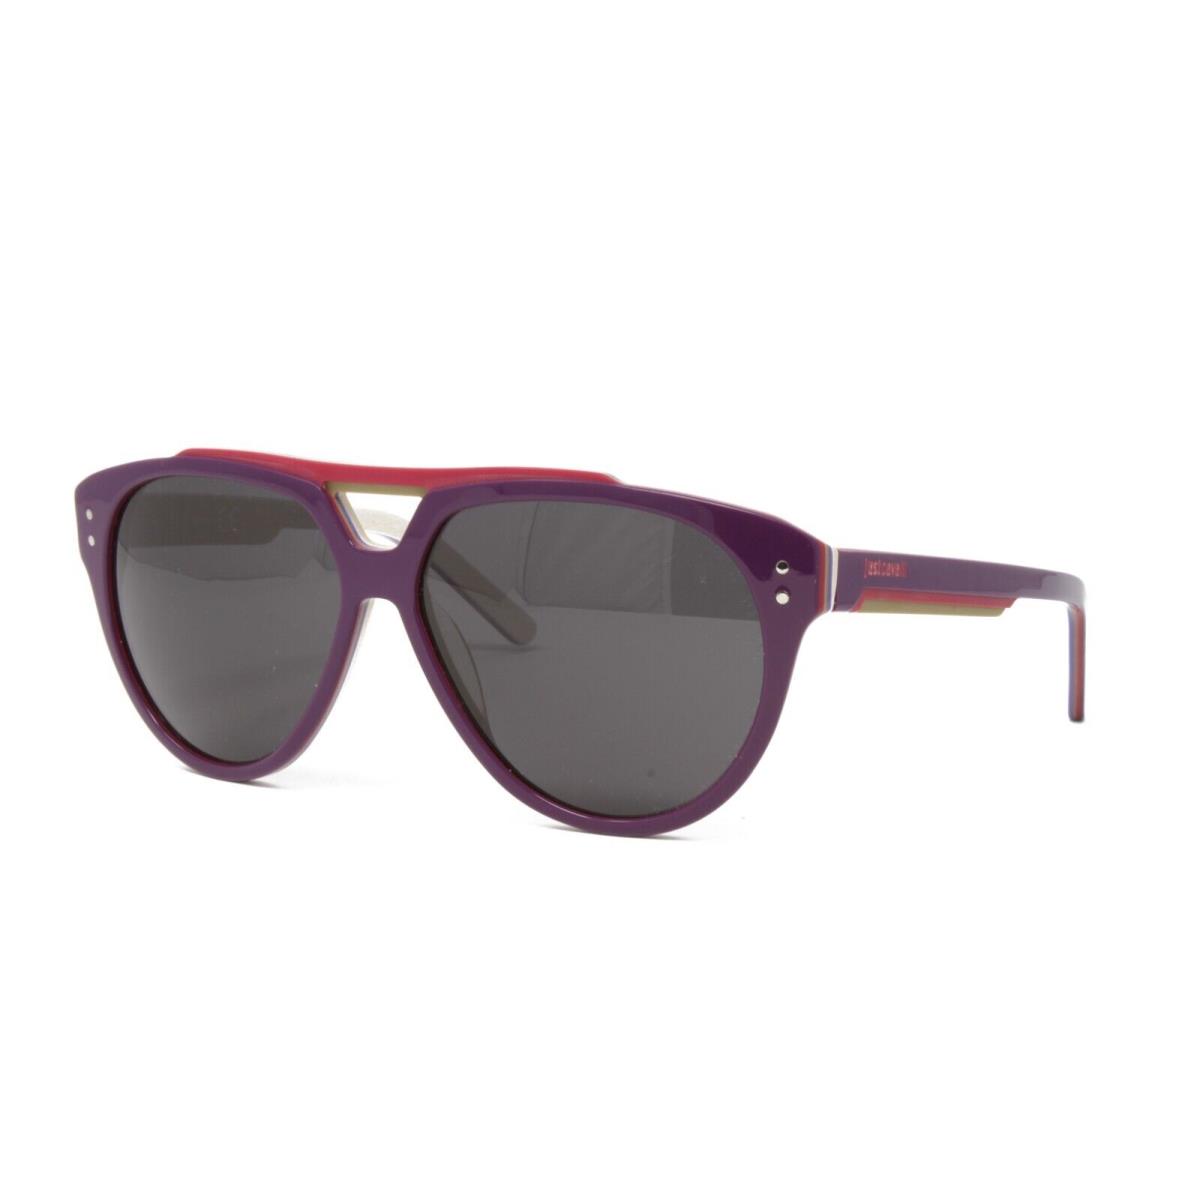 Just Cavalli Sunglasses Unisex Pilot JC506S 83A Purple/cream/red 58mm